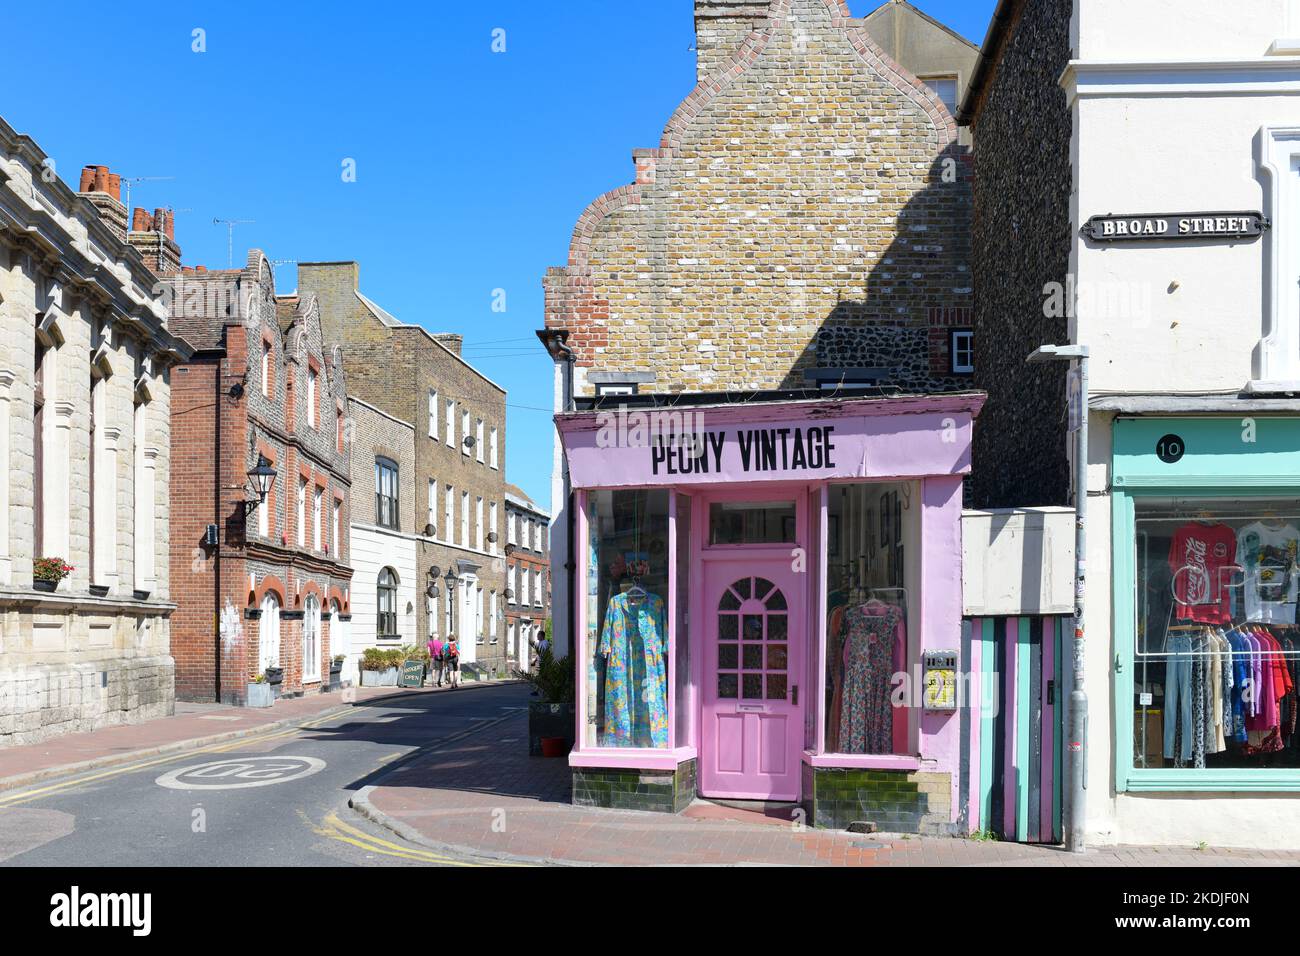 Margate Old Town - colorati negozi dipinti su Broad Street e King Street Margate, Kent, Inghilterra, Regno Unito Foto Stock